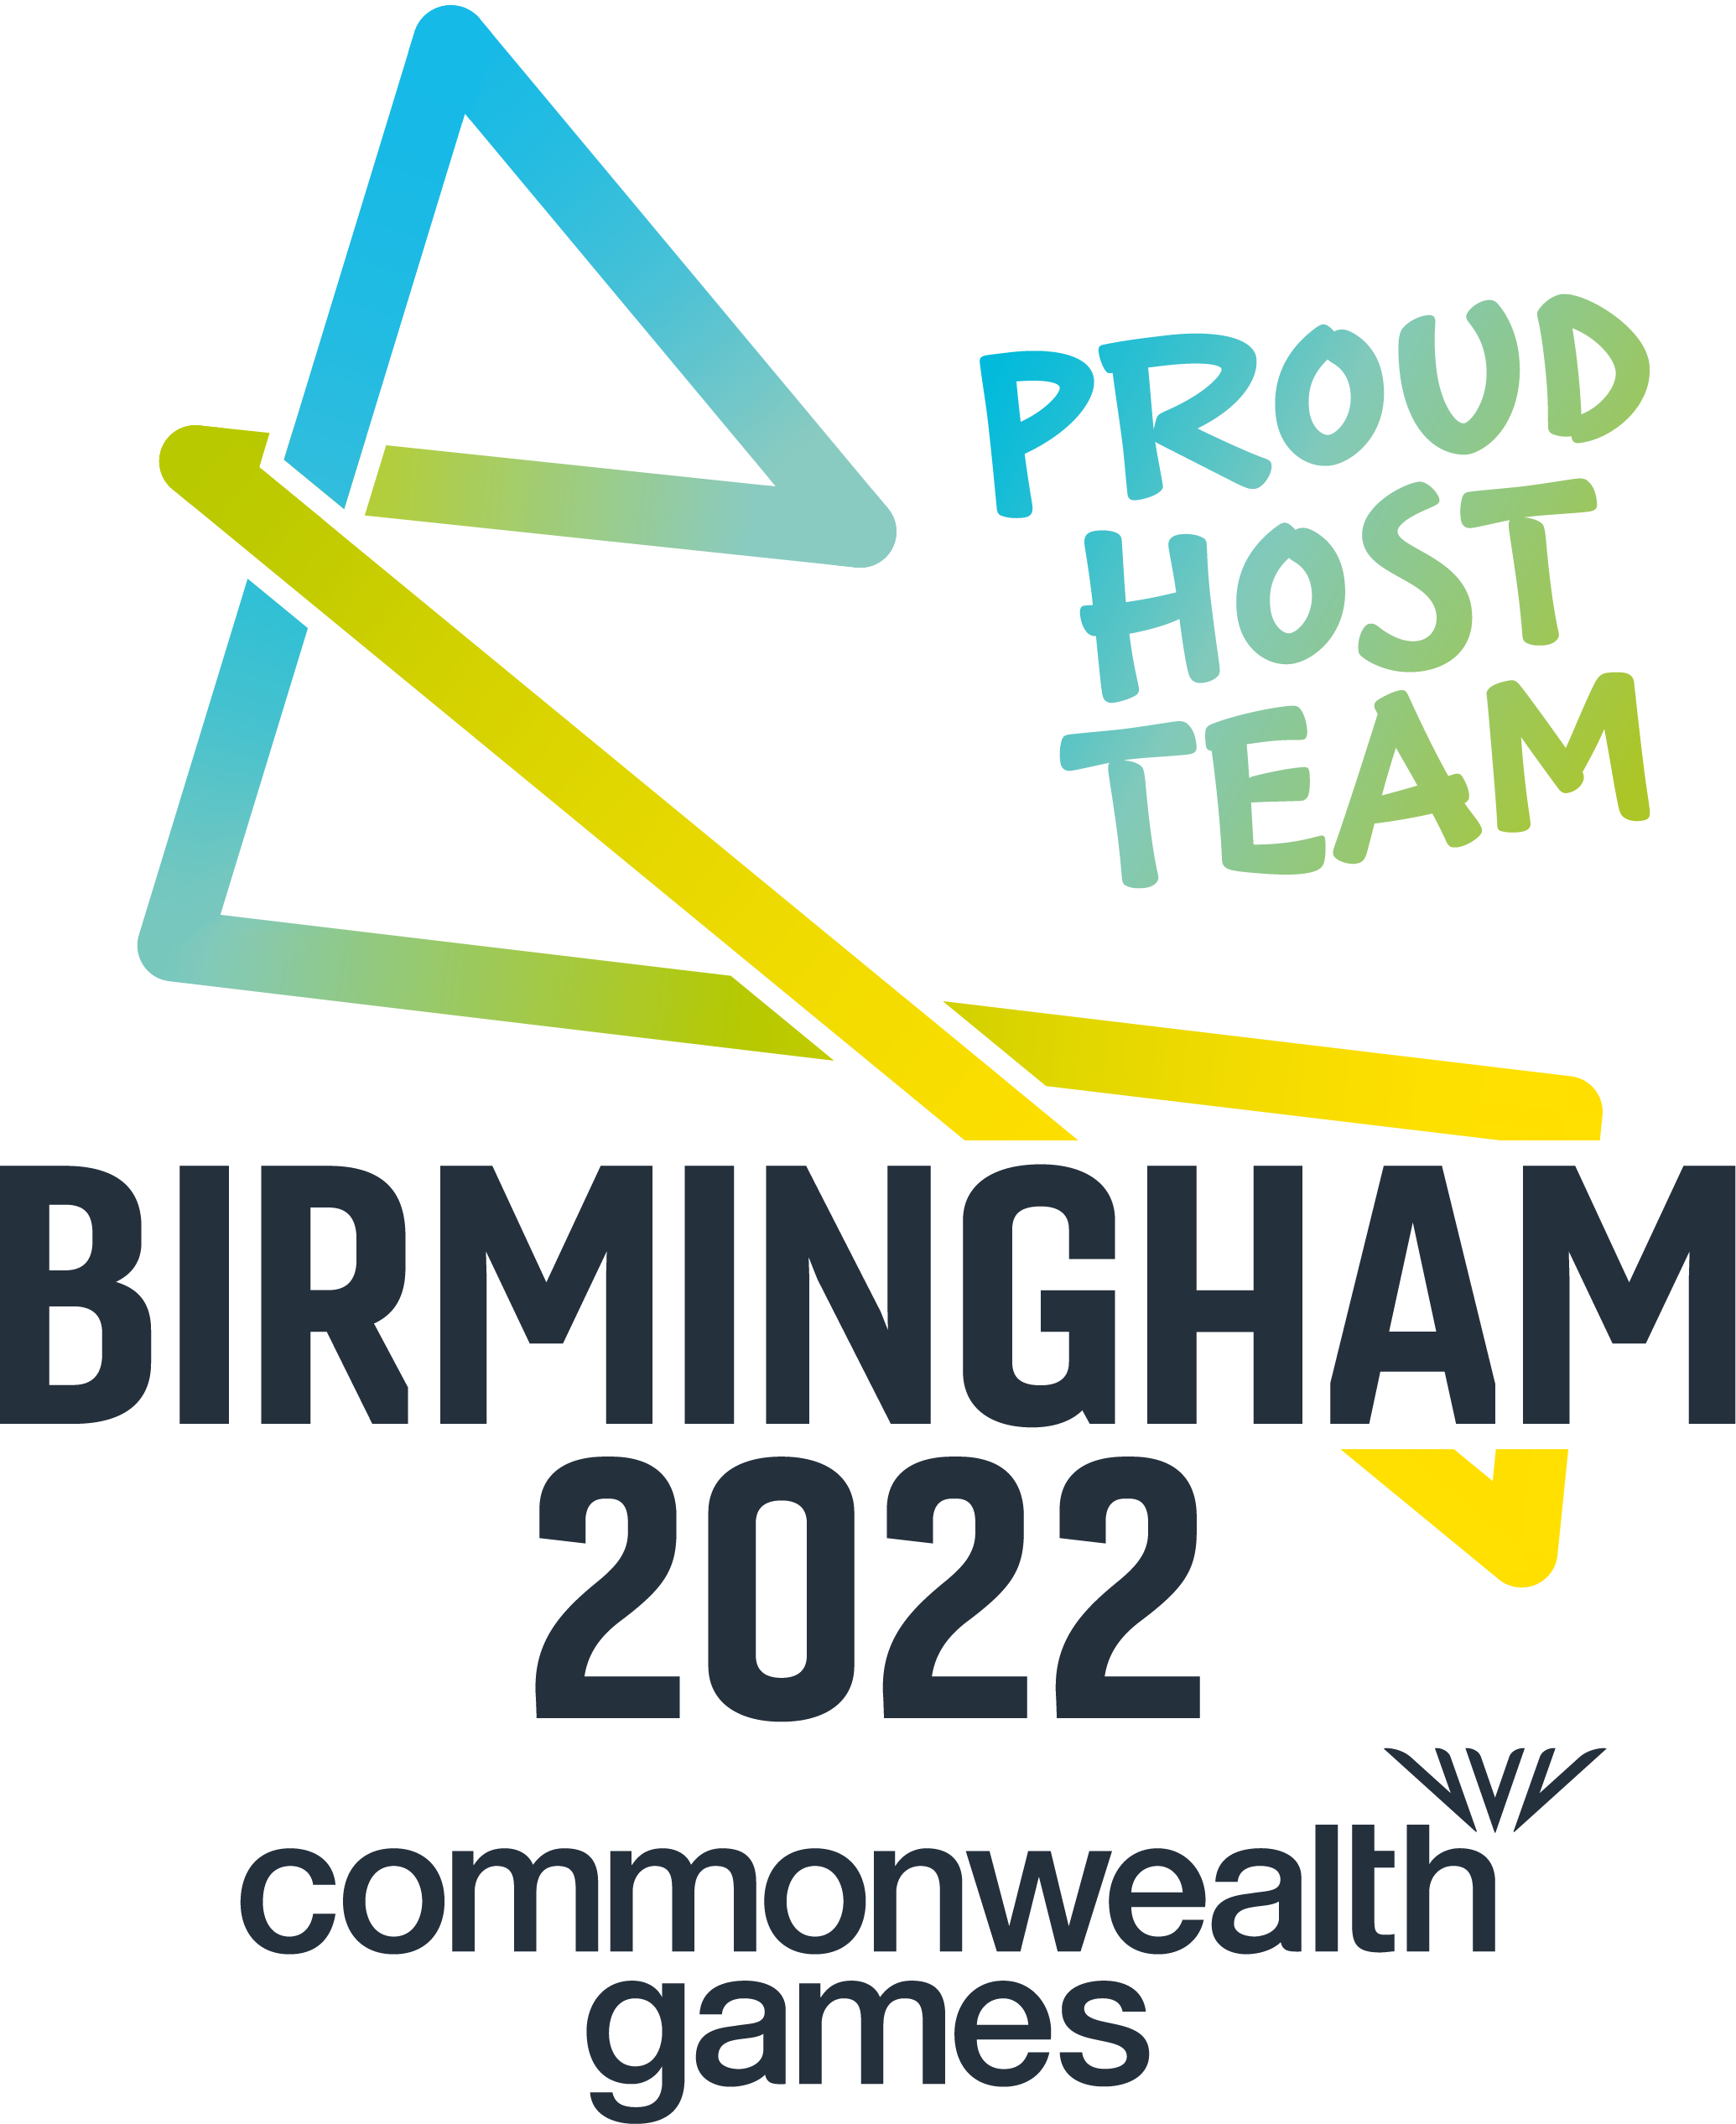 Birmingham 2022 logo